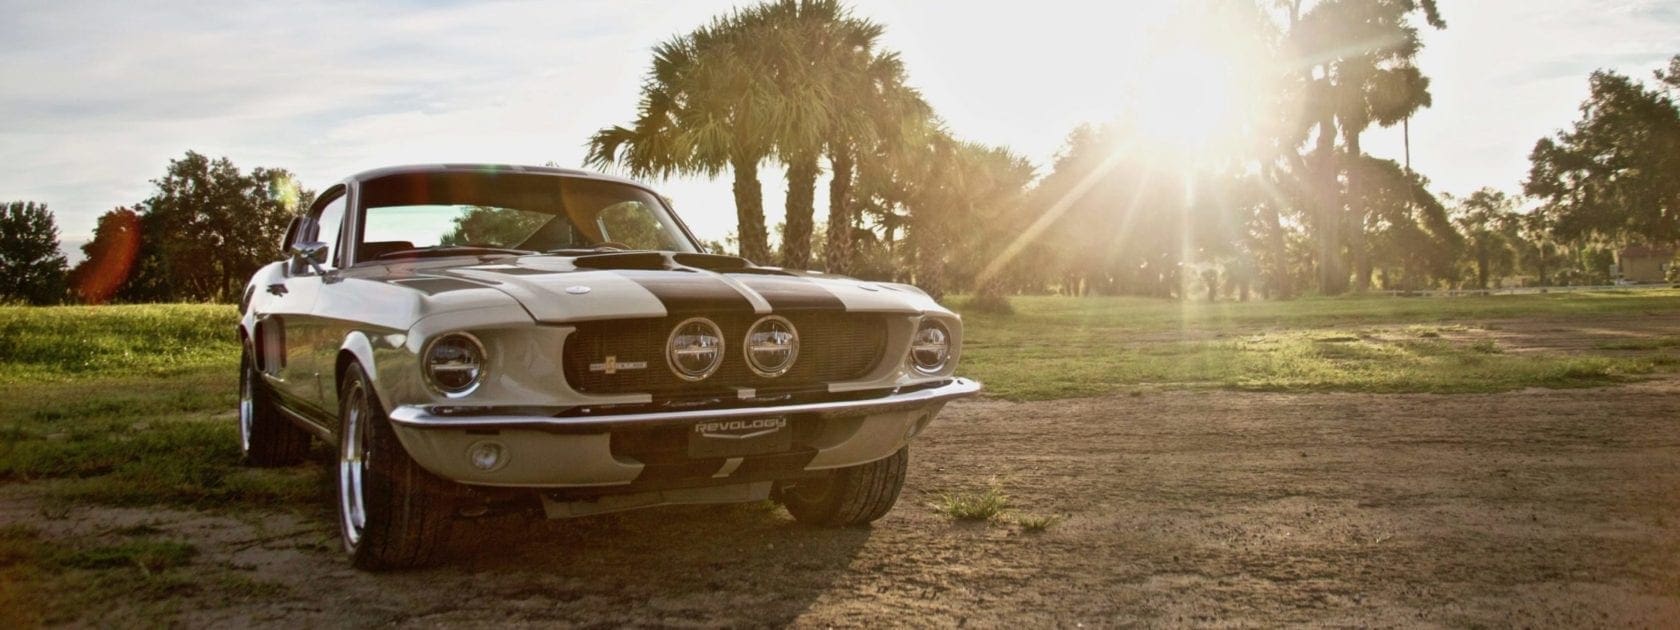 A brand-new, fully modernized '65 Mustang